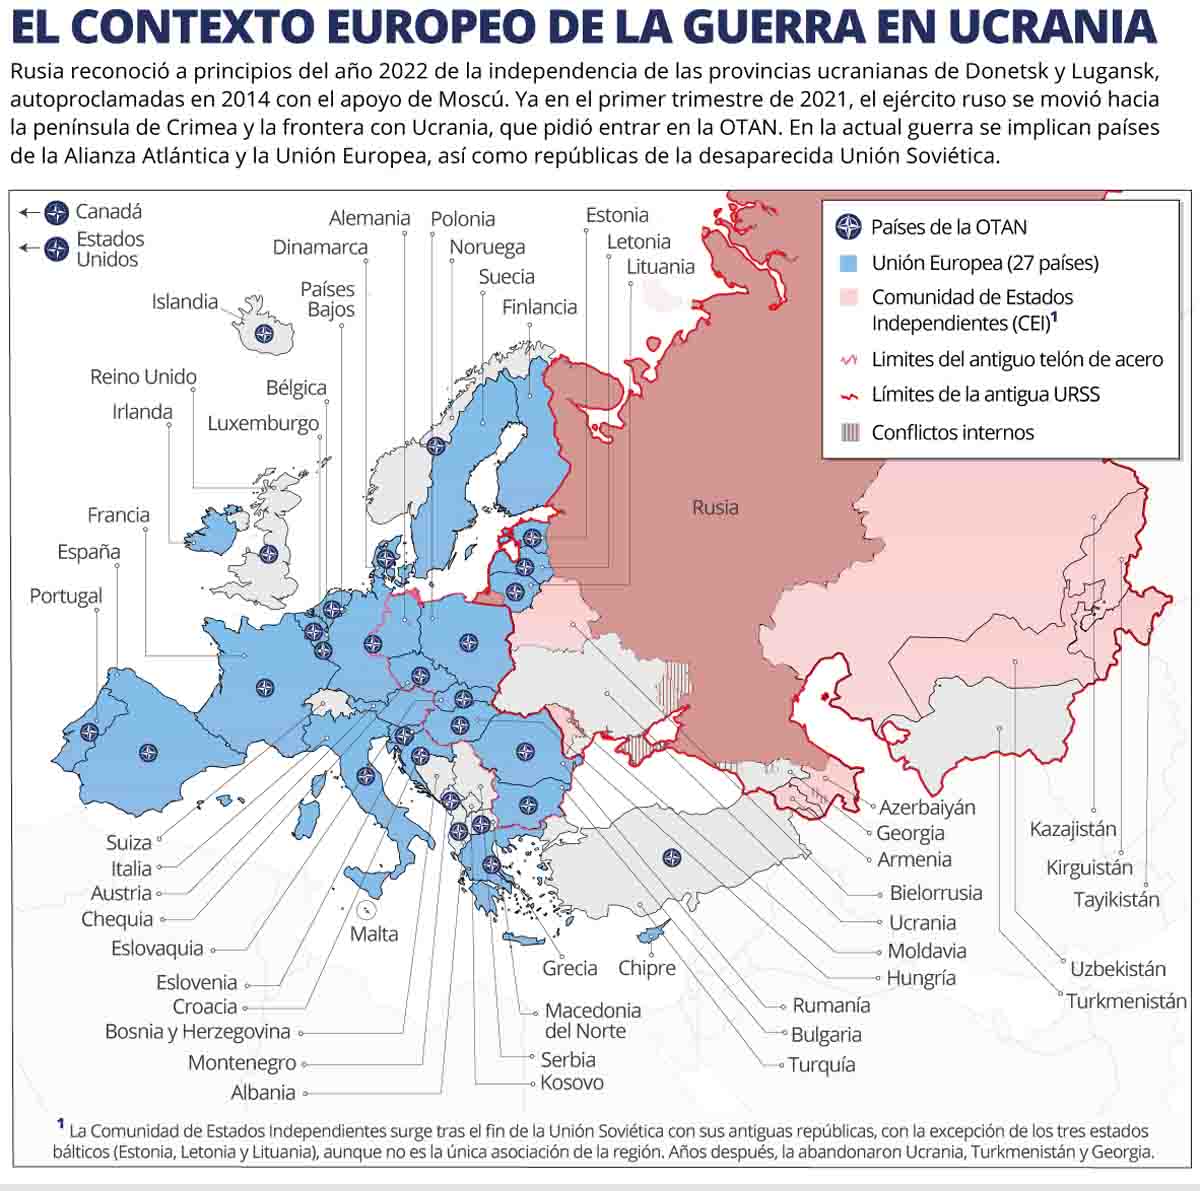 Contexto europeo de la guerra en Ucania / Imagen: EP